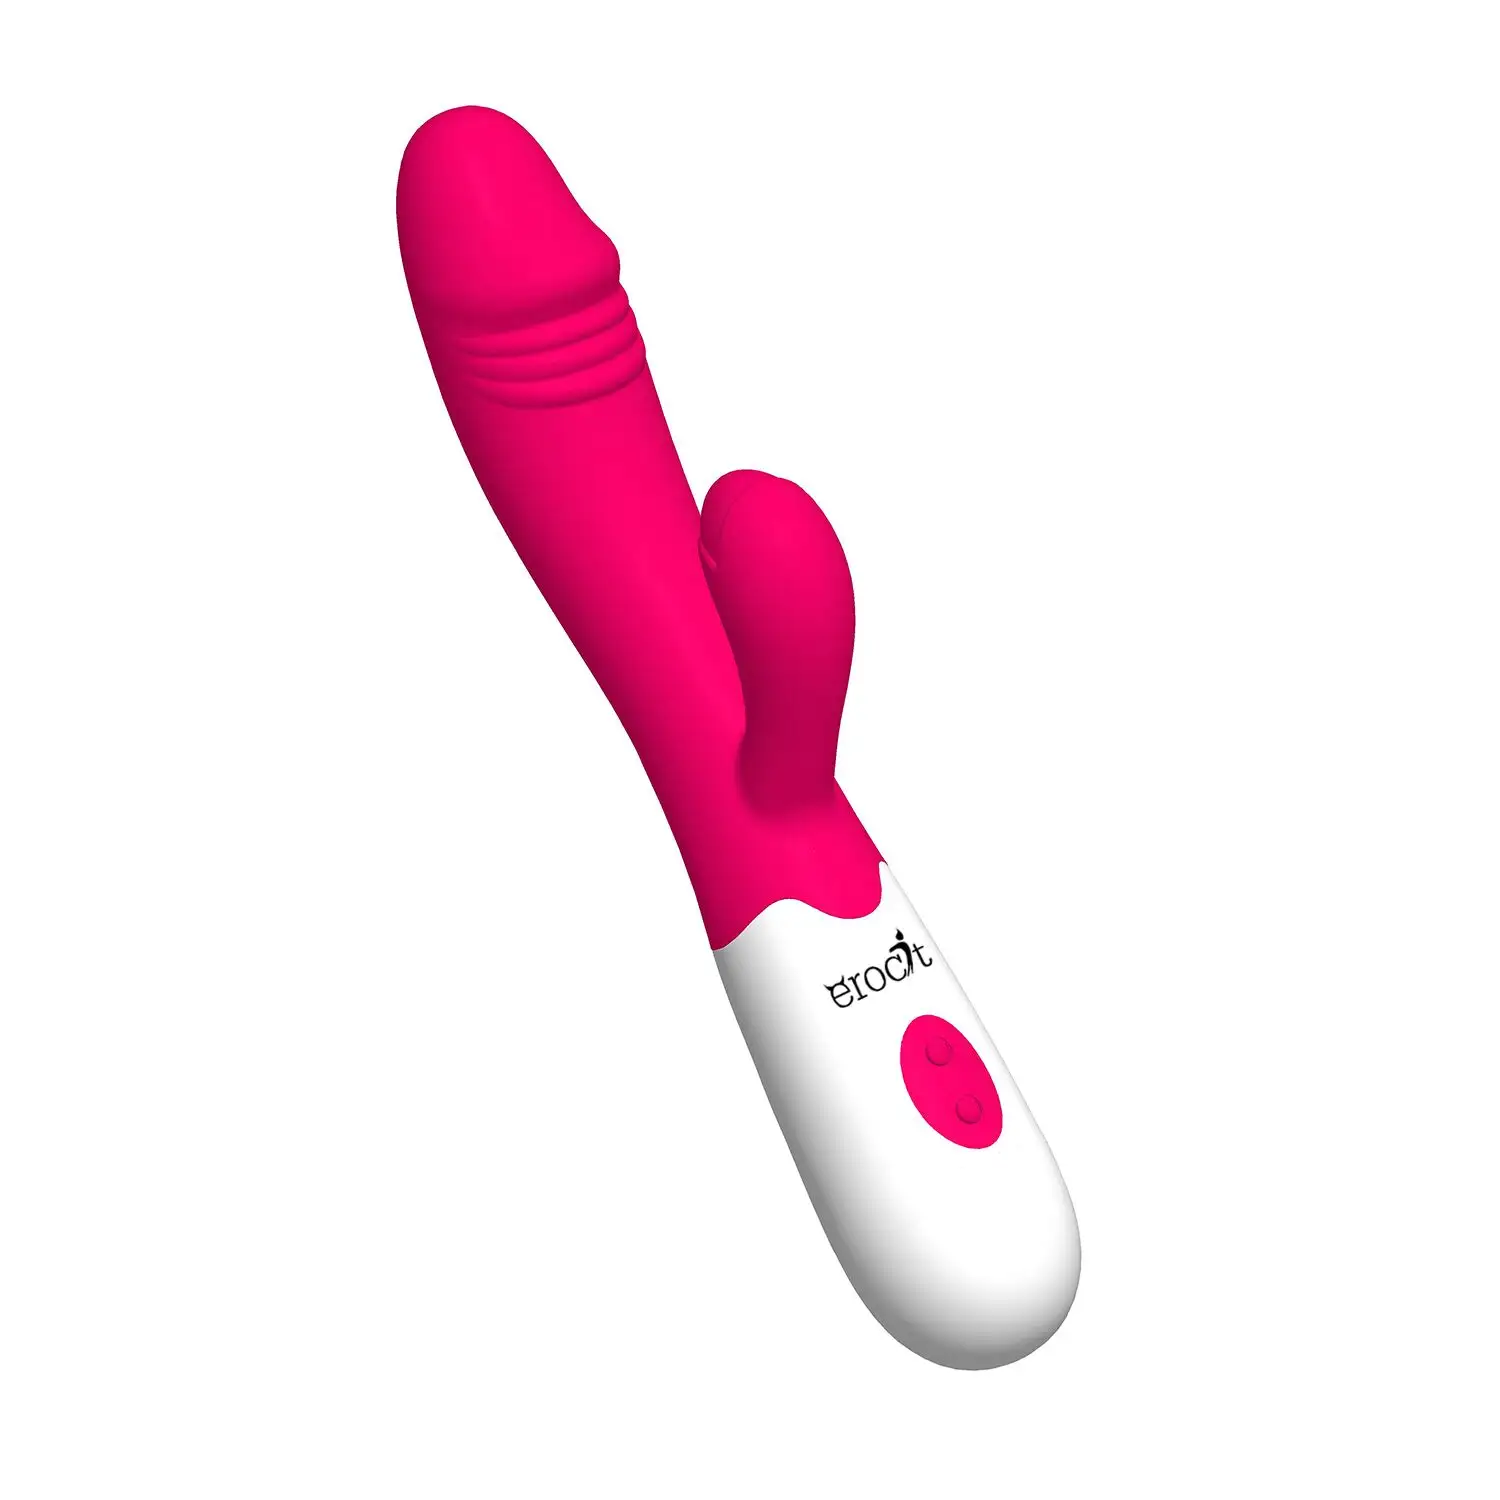 अमेज़न गर्म बेच सिलिकॉन Dildo के 30 गति कंपन खरगोश थरथानेवाला dildo के सेक्स खिलौना